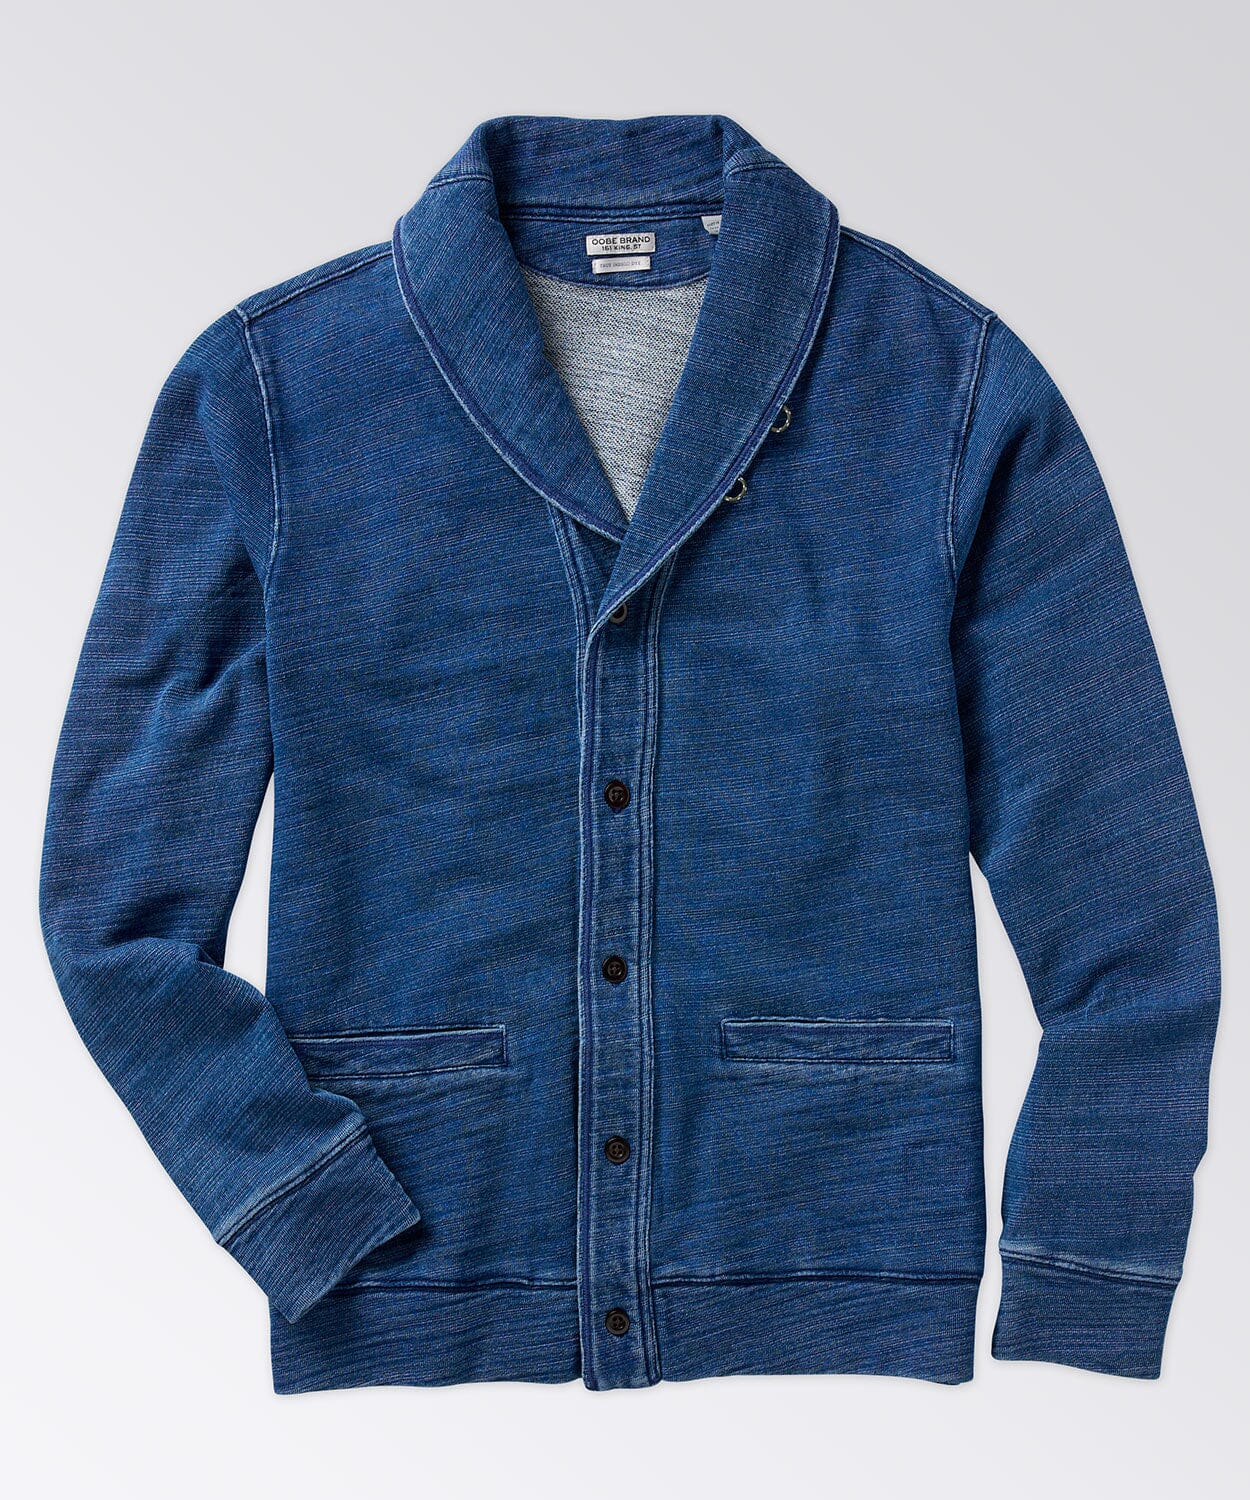 Indigo Blue Collection by | BRAND Premium OOBE Menswear